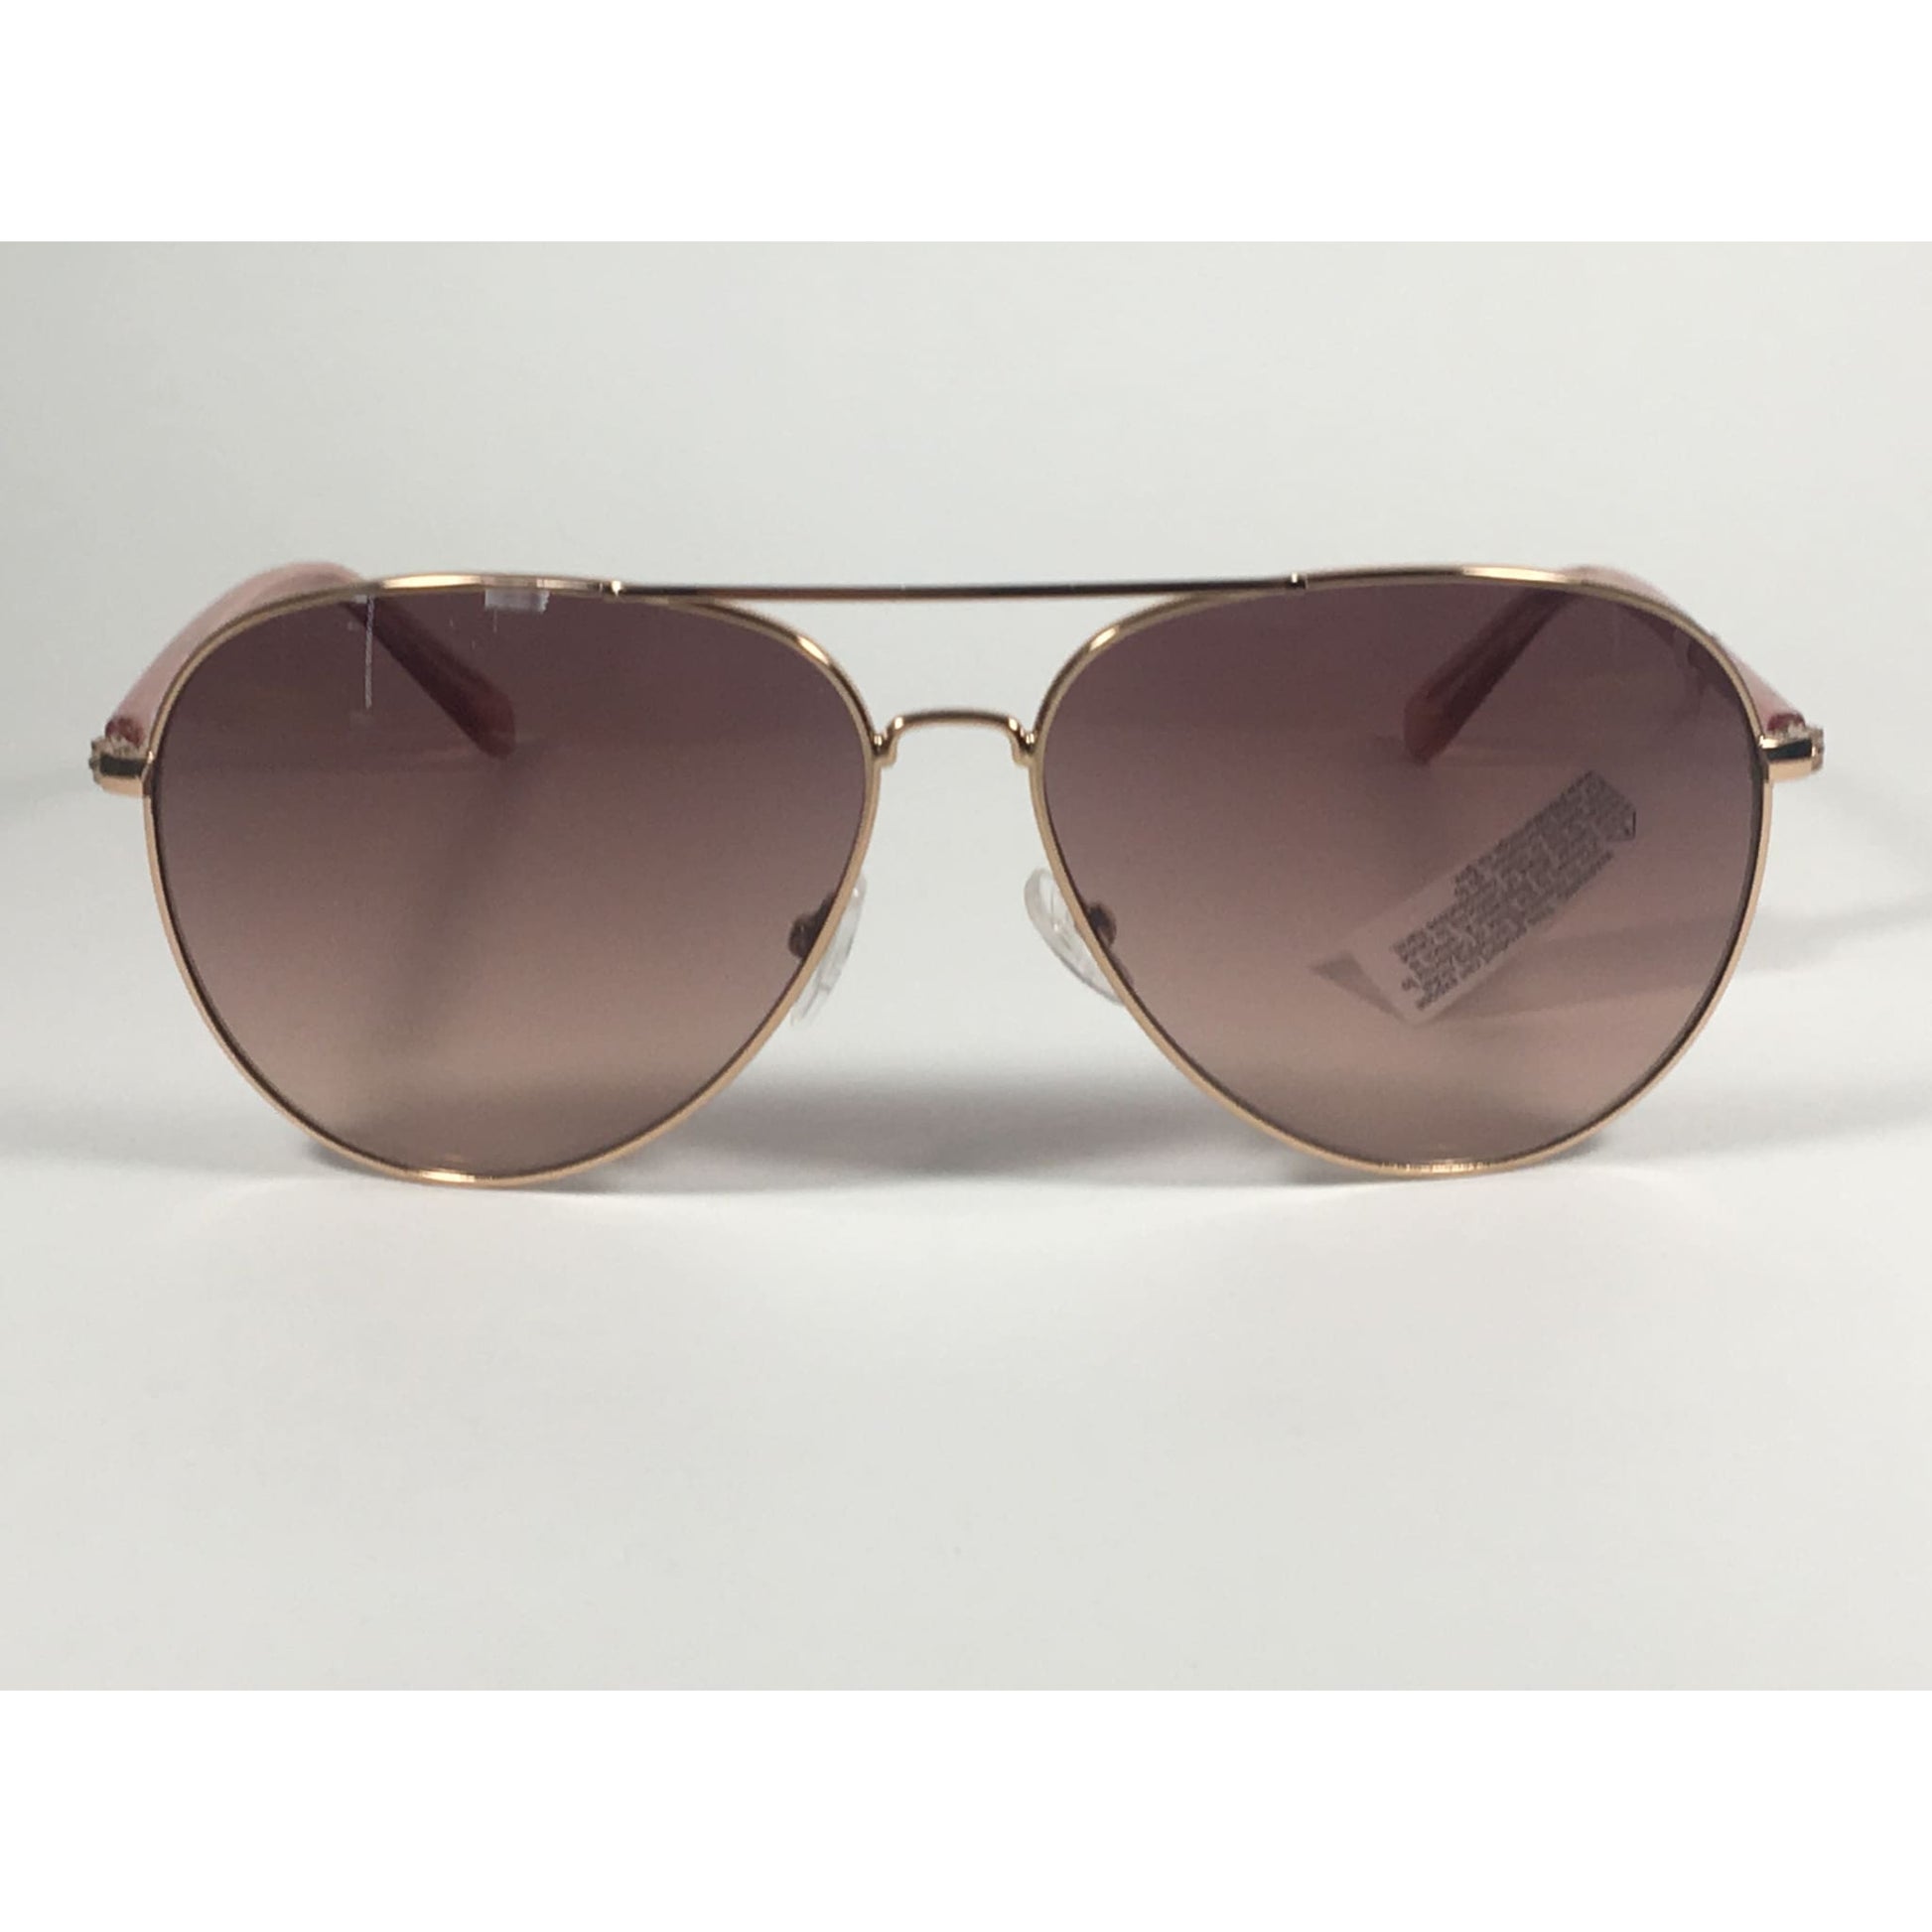 Calvin Klein CK19314S 780 Aviator Pilot Sunglasses Rose Gold With Brown Rose Gradient Lens - Sunglasses